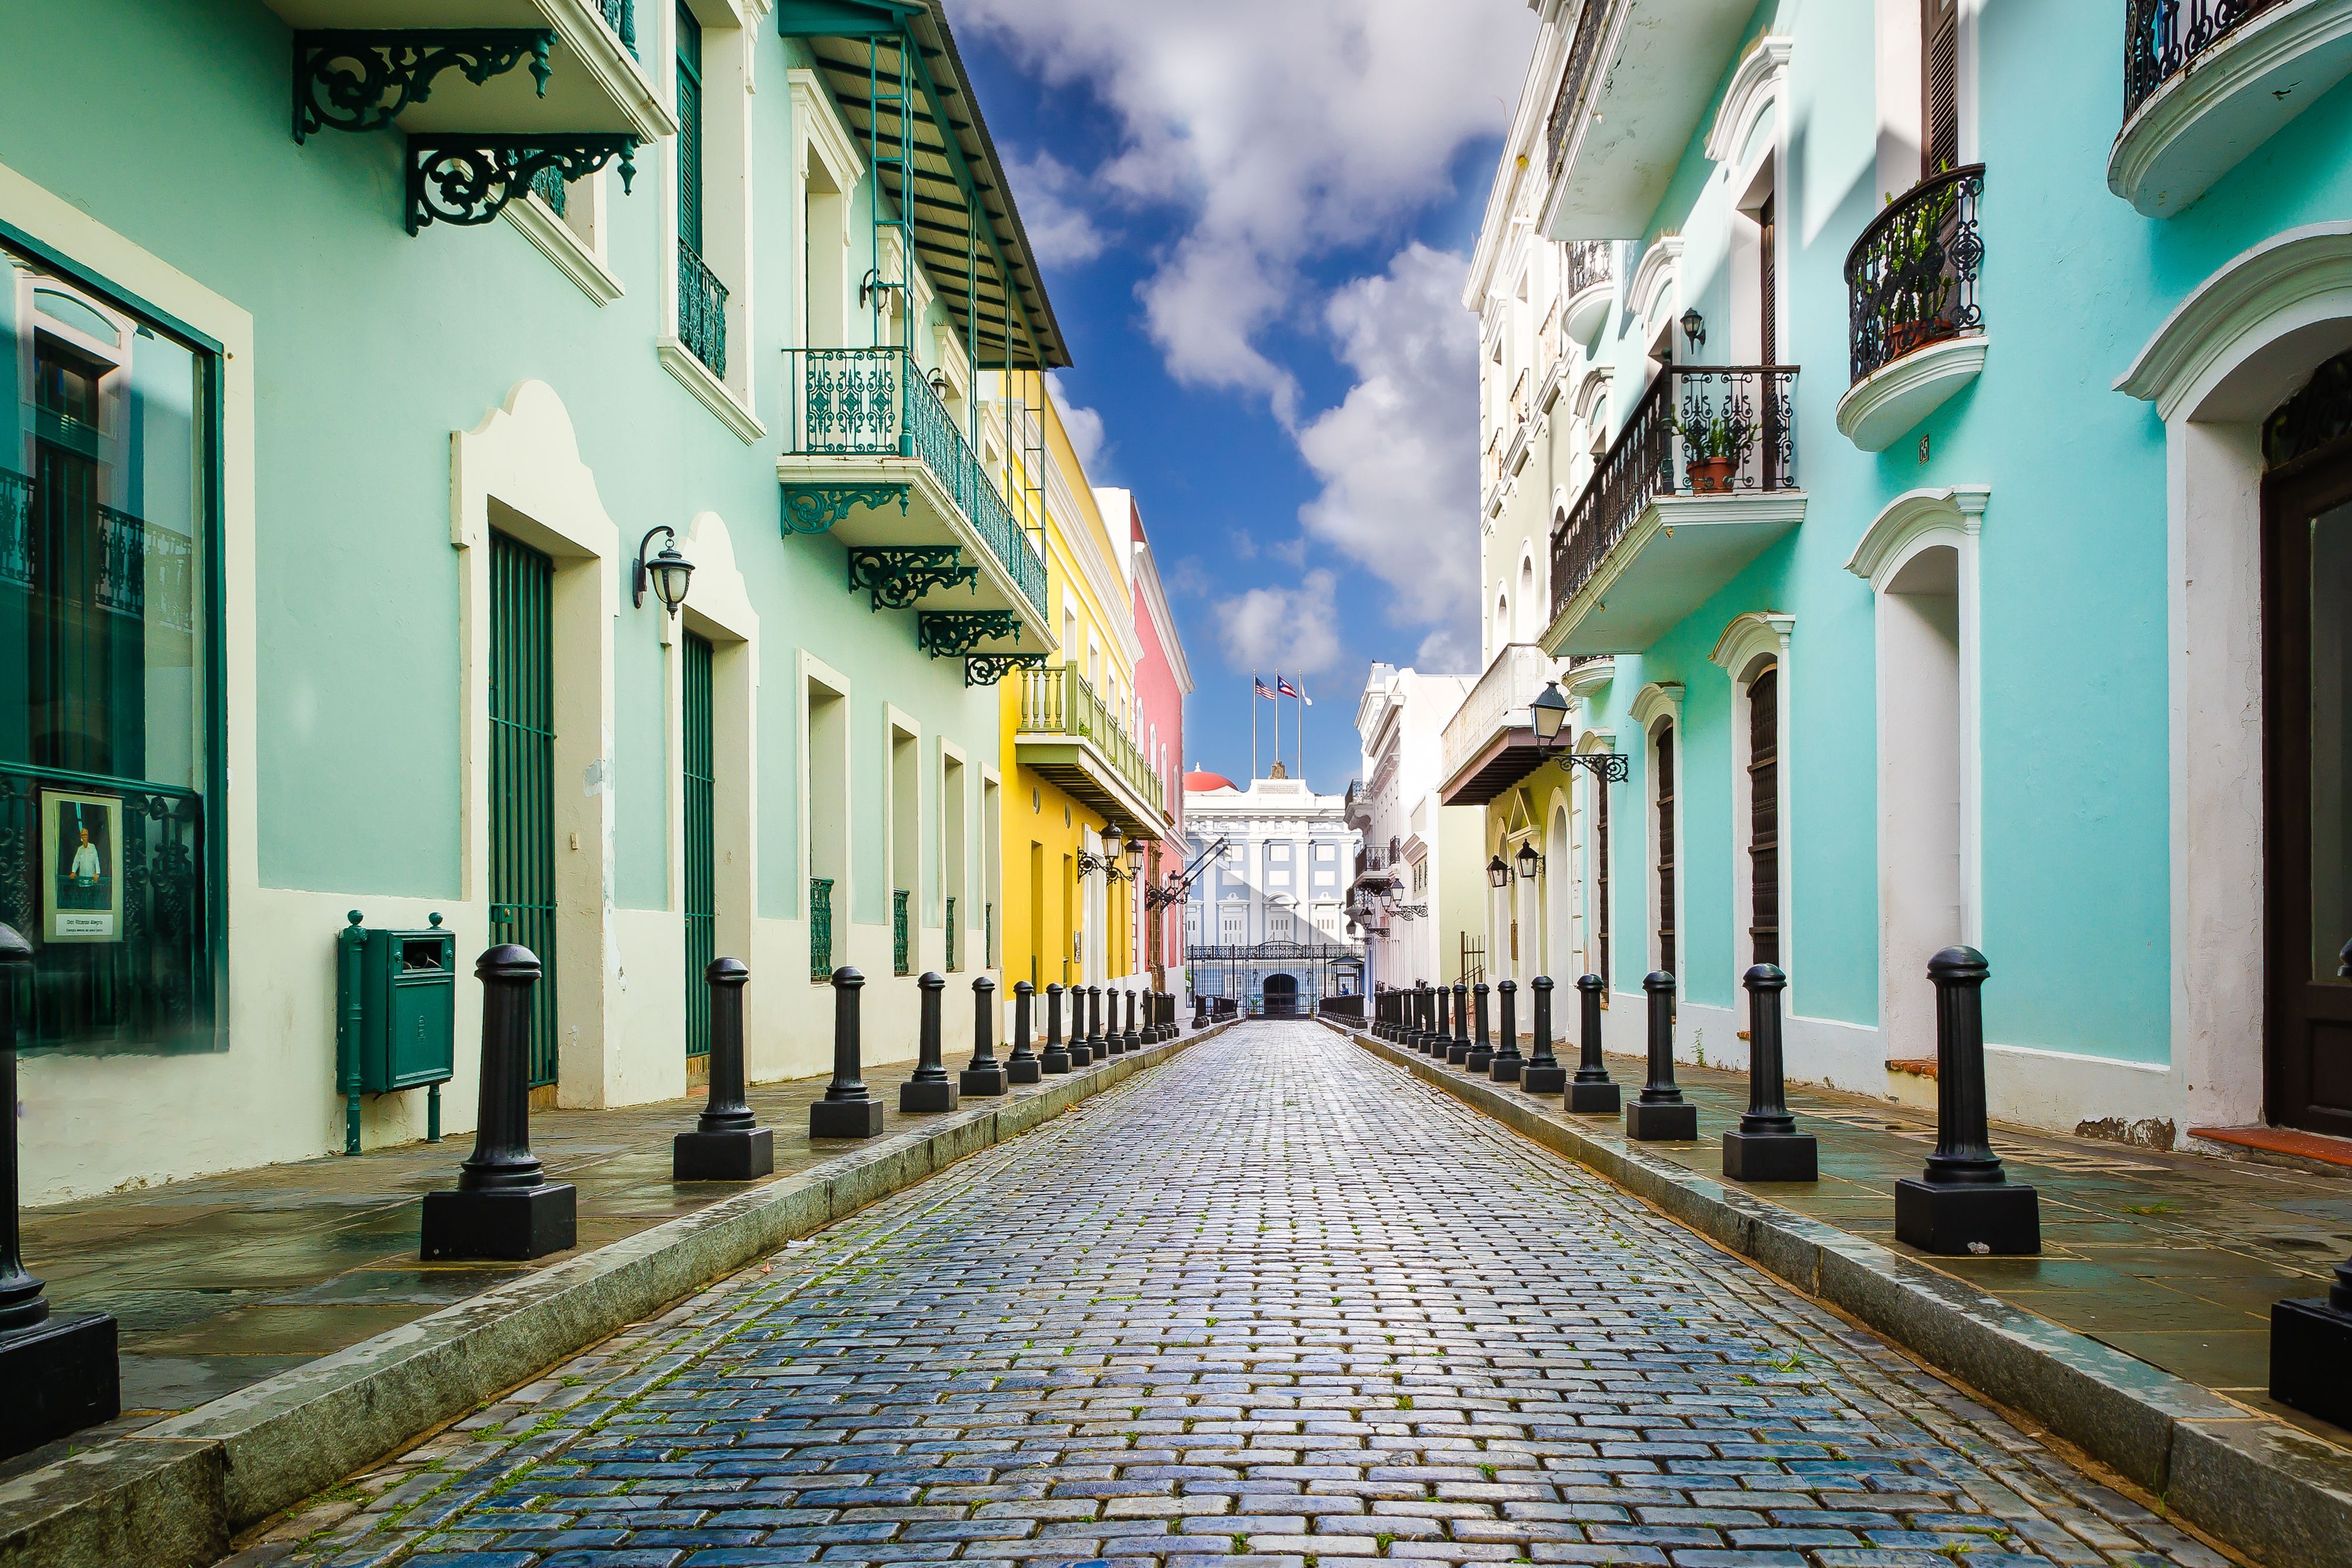 Cobblestone street with colorful buildings leading to La Fortaleza 